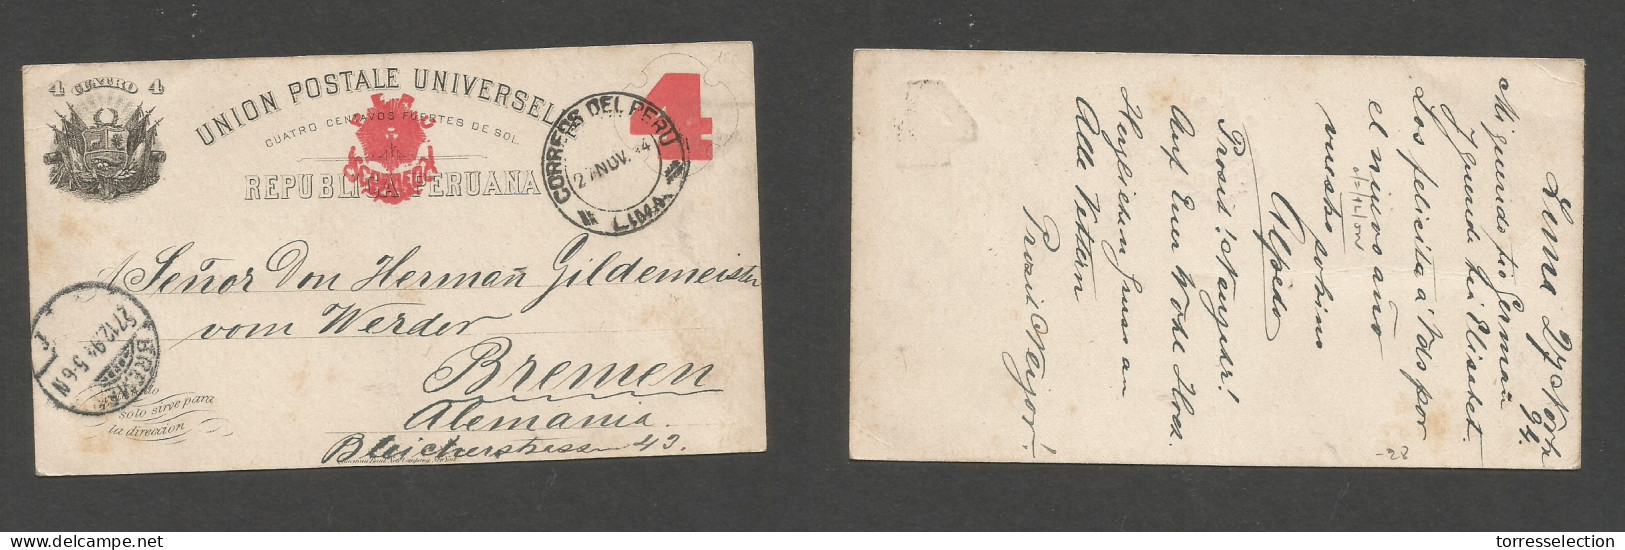 PERU. 1894 (27 Nov) Lima - Germany, Bremen (27 Dic) 4c Red / Black Stat Card, Tied Cds. Fine. - Perú